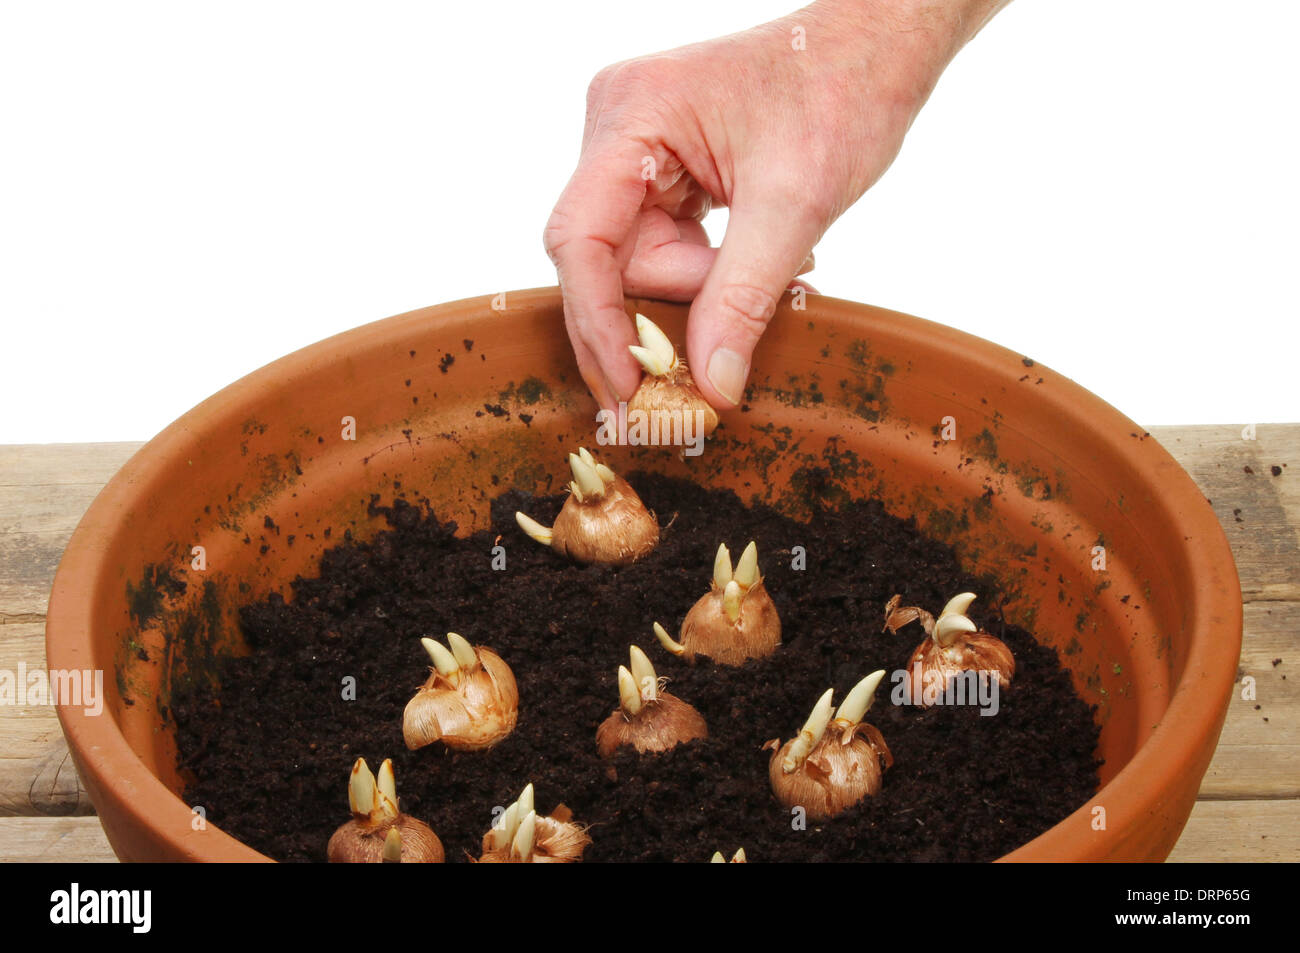 Hand planting crocus bulbs into a pot on a potting bench Stock Photo - Alamy